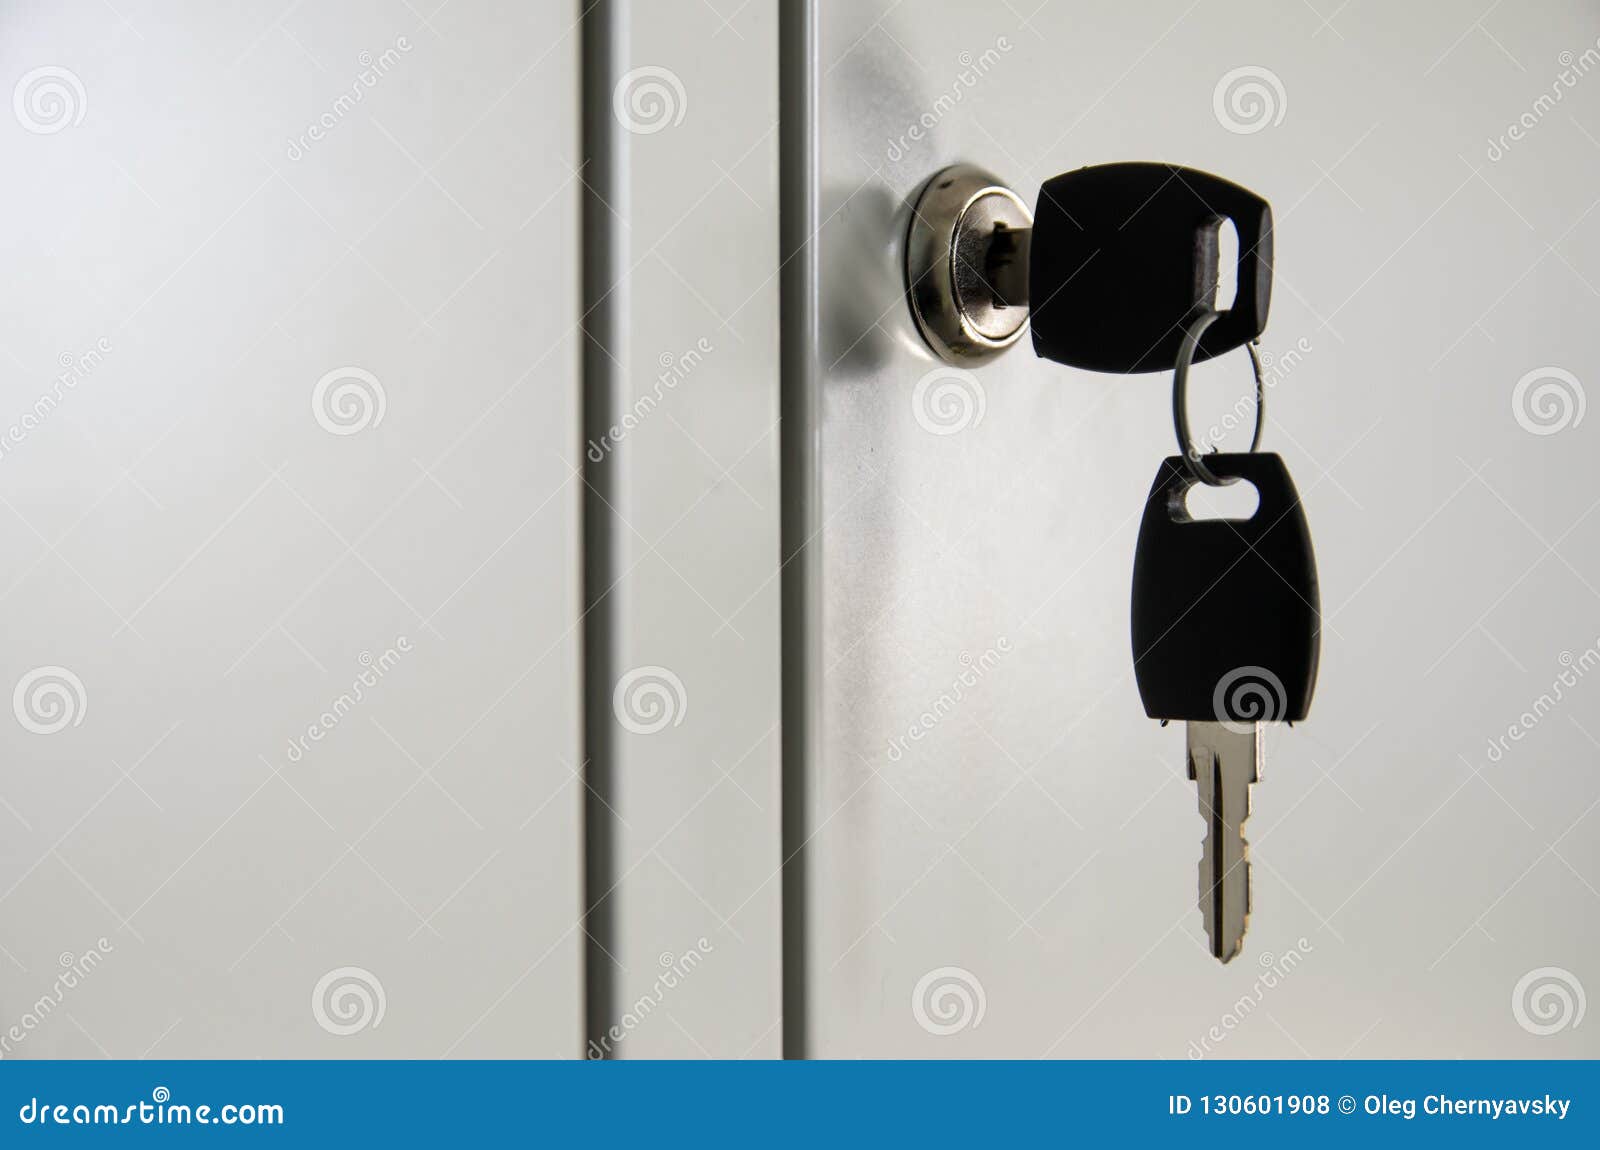 Незакрытый. Ключи от локеры. Ключ Энергомера от шкафа. Ключ от локера. Потерял ключ от шкафчика.